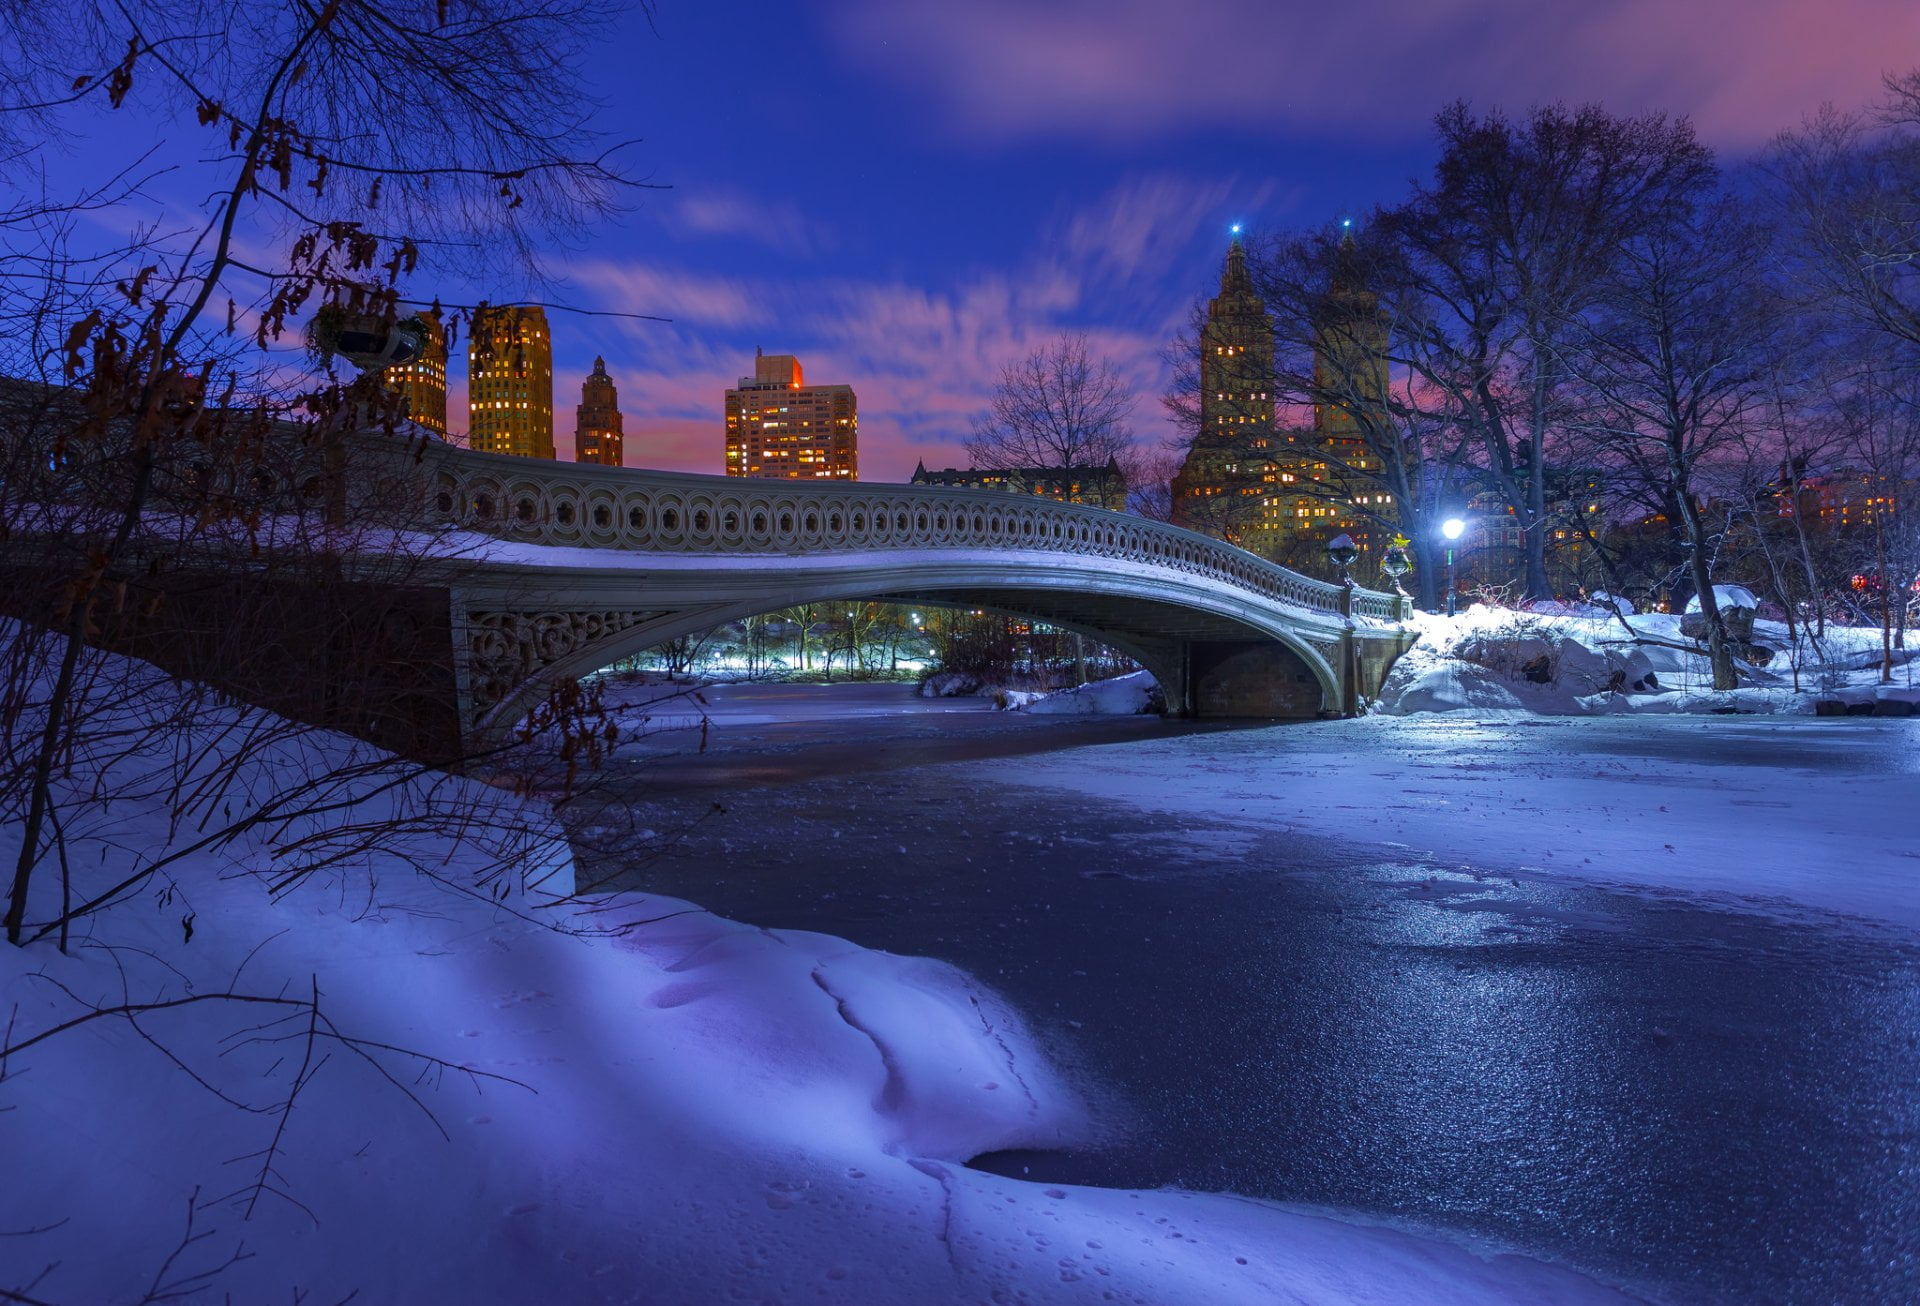 Man Made, Central Park, Bridge, New York, Night, Snow, Winter